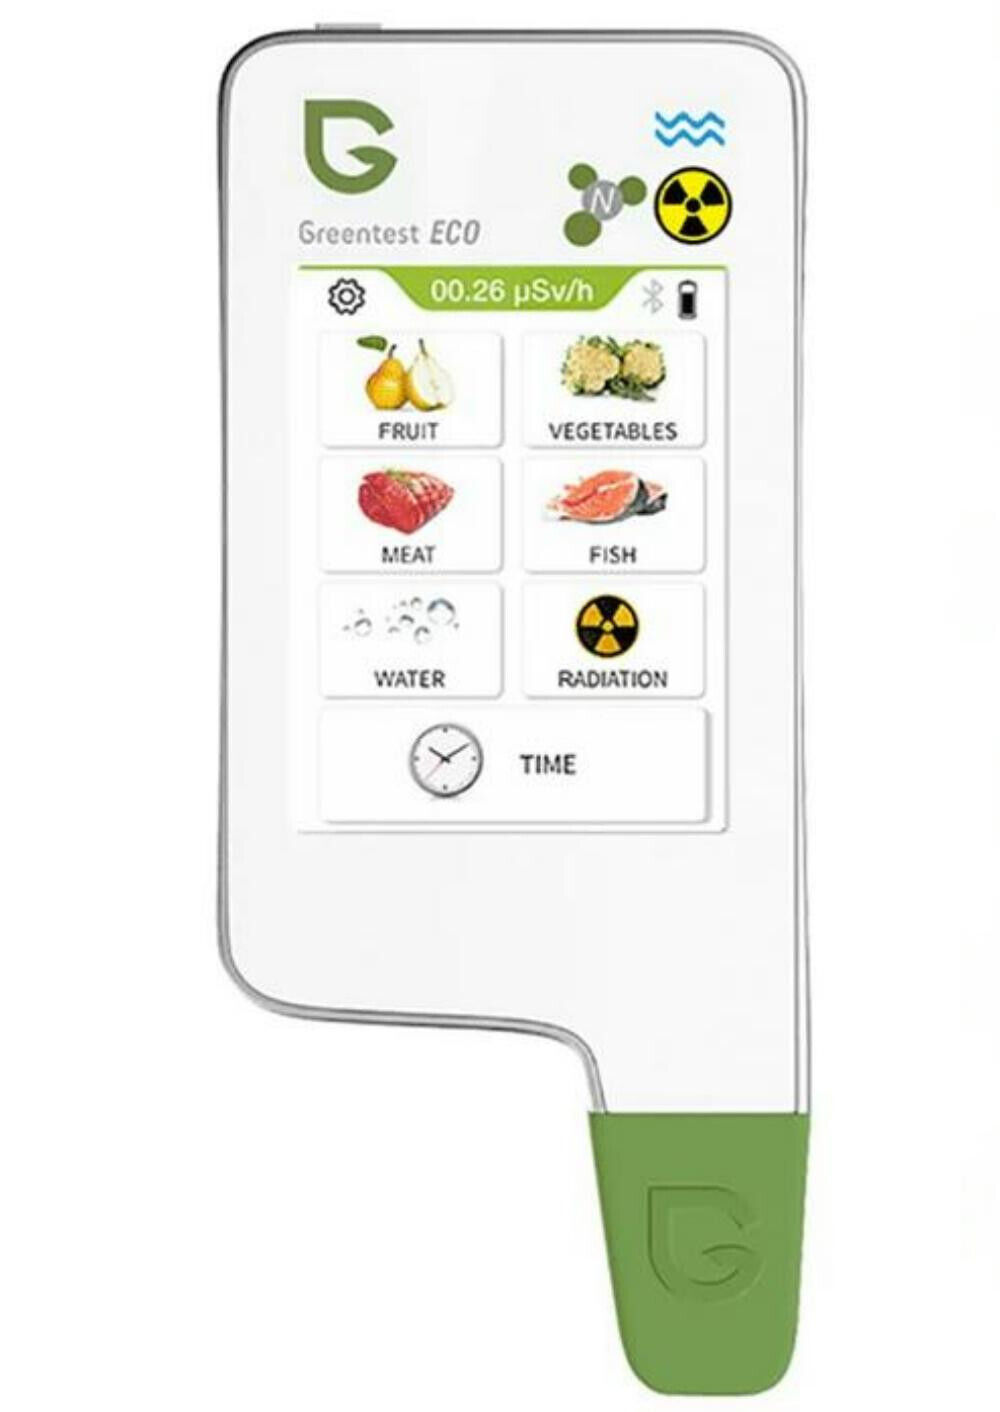 Geiger counter Greentest Eco 6 nitrate tester fruit vegetable radiation meter